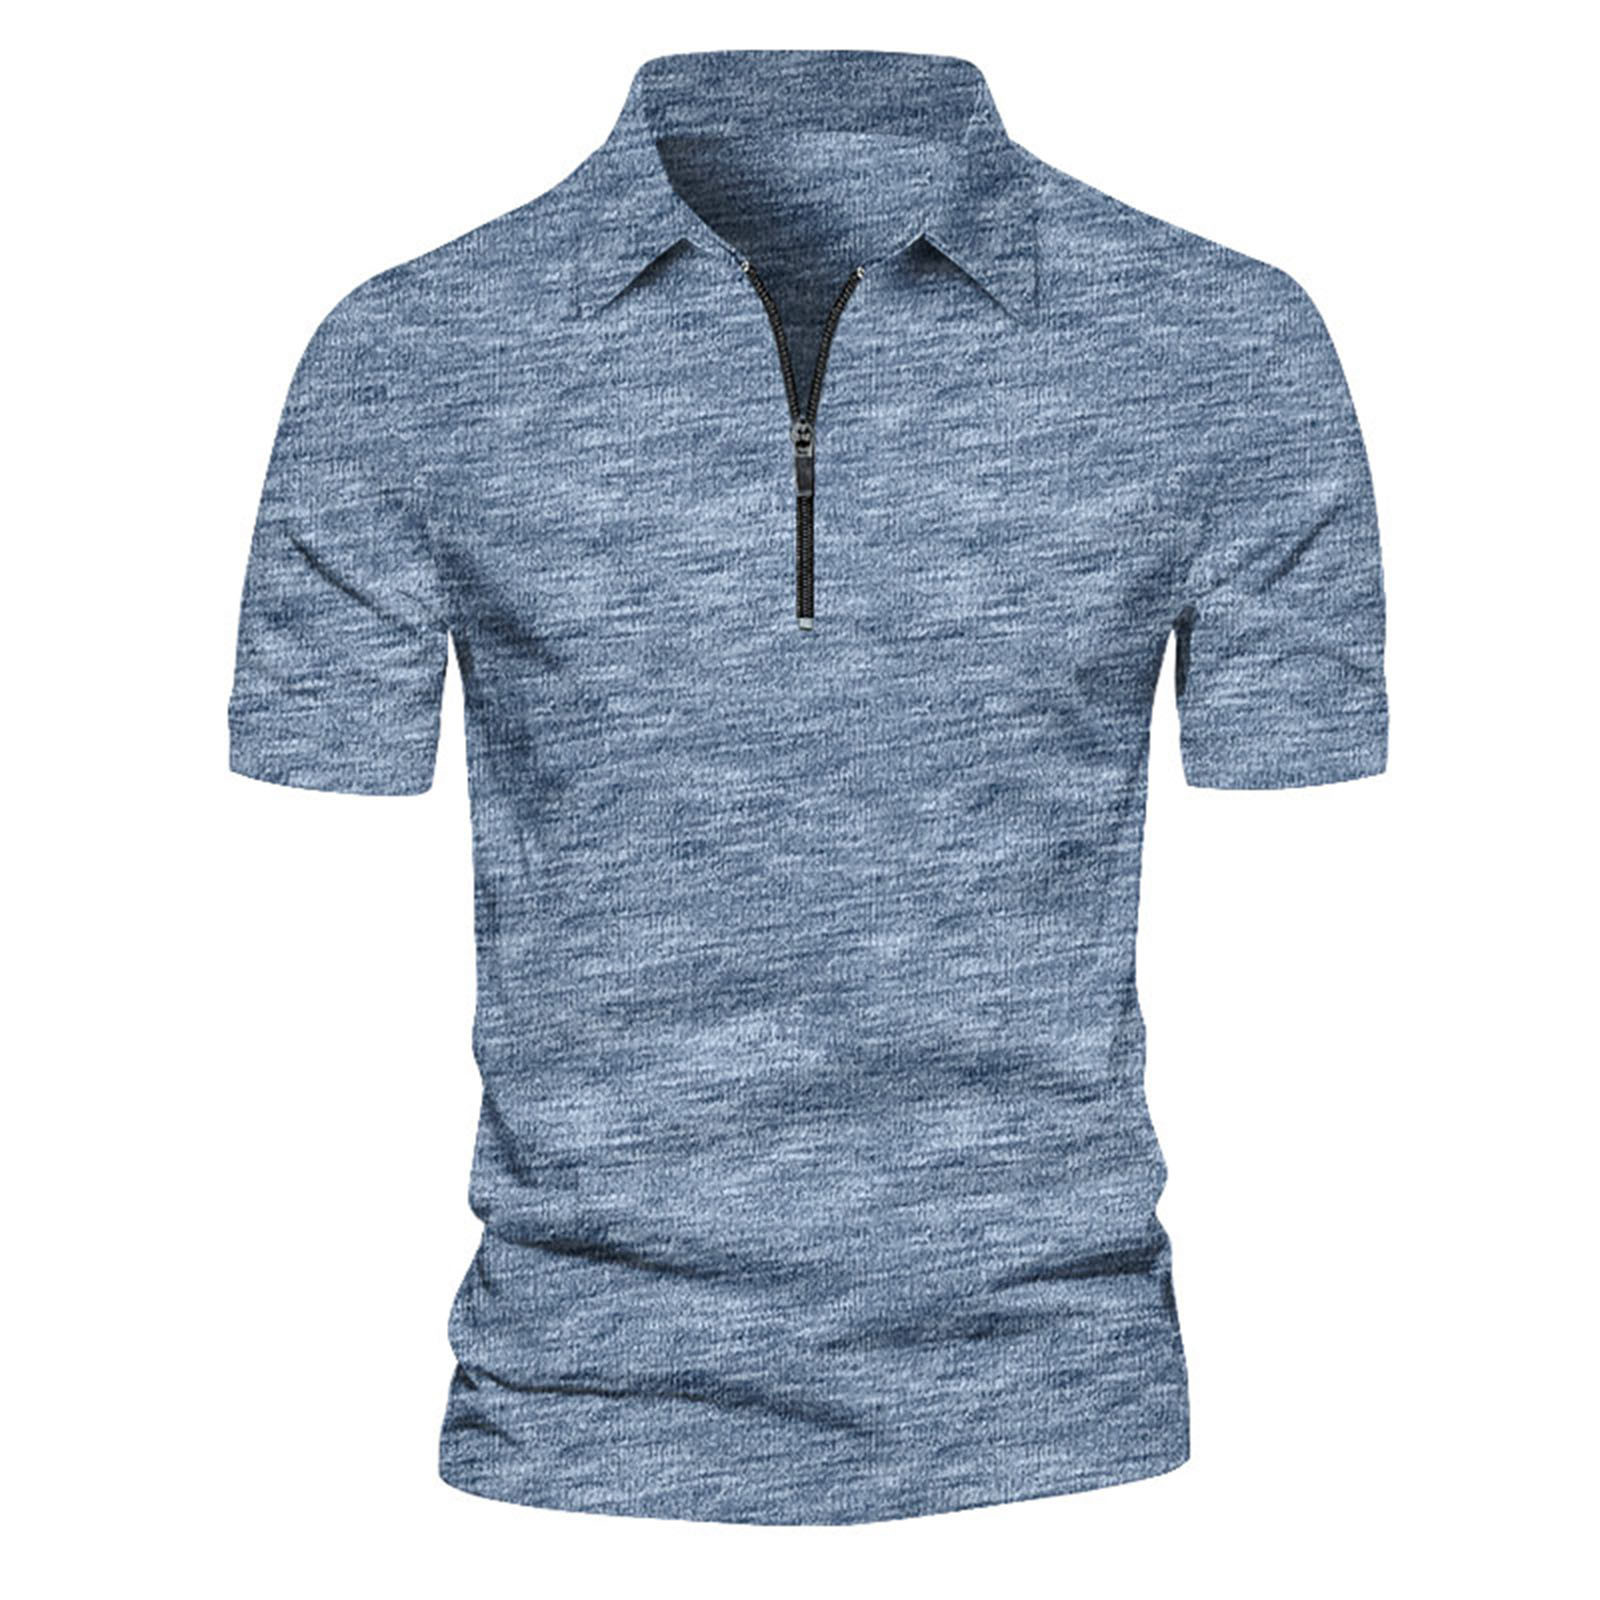 tklpehg Tshirts Shirts for Men Summer Business Basic Tops Lapel Zipper ...